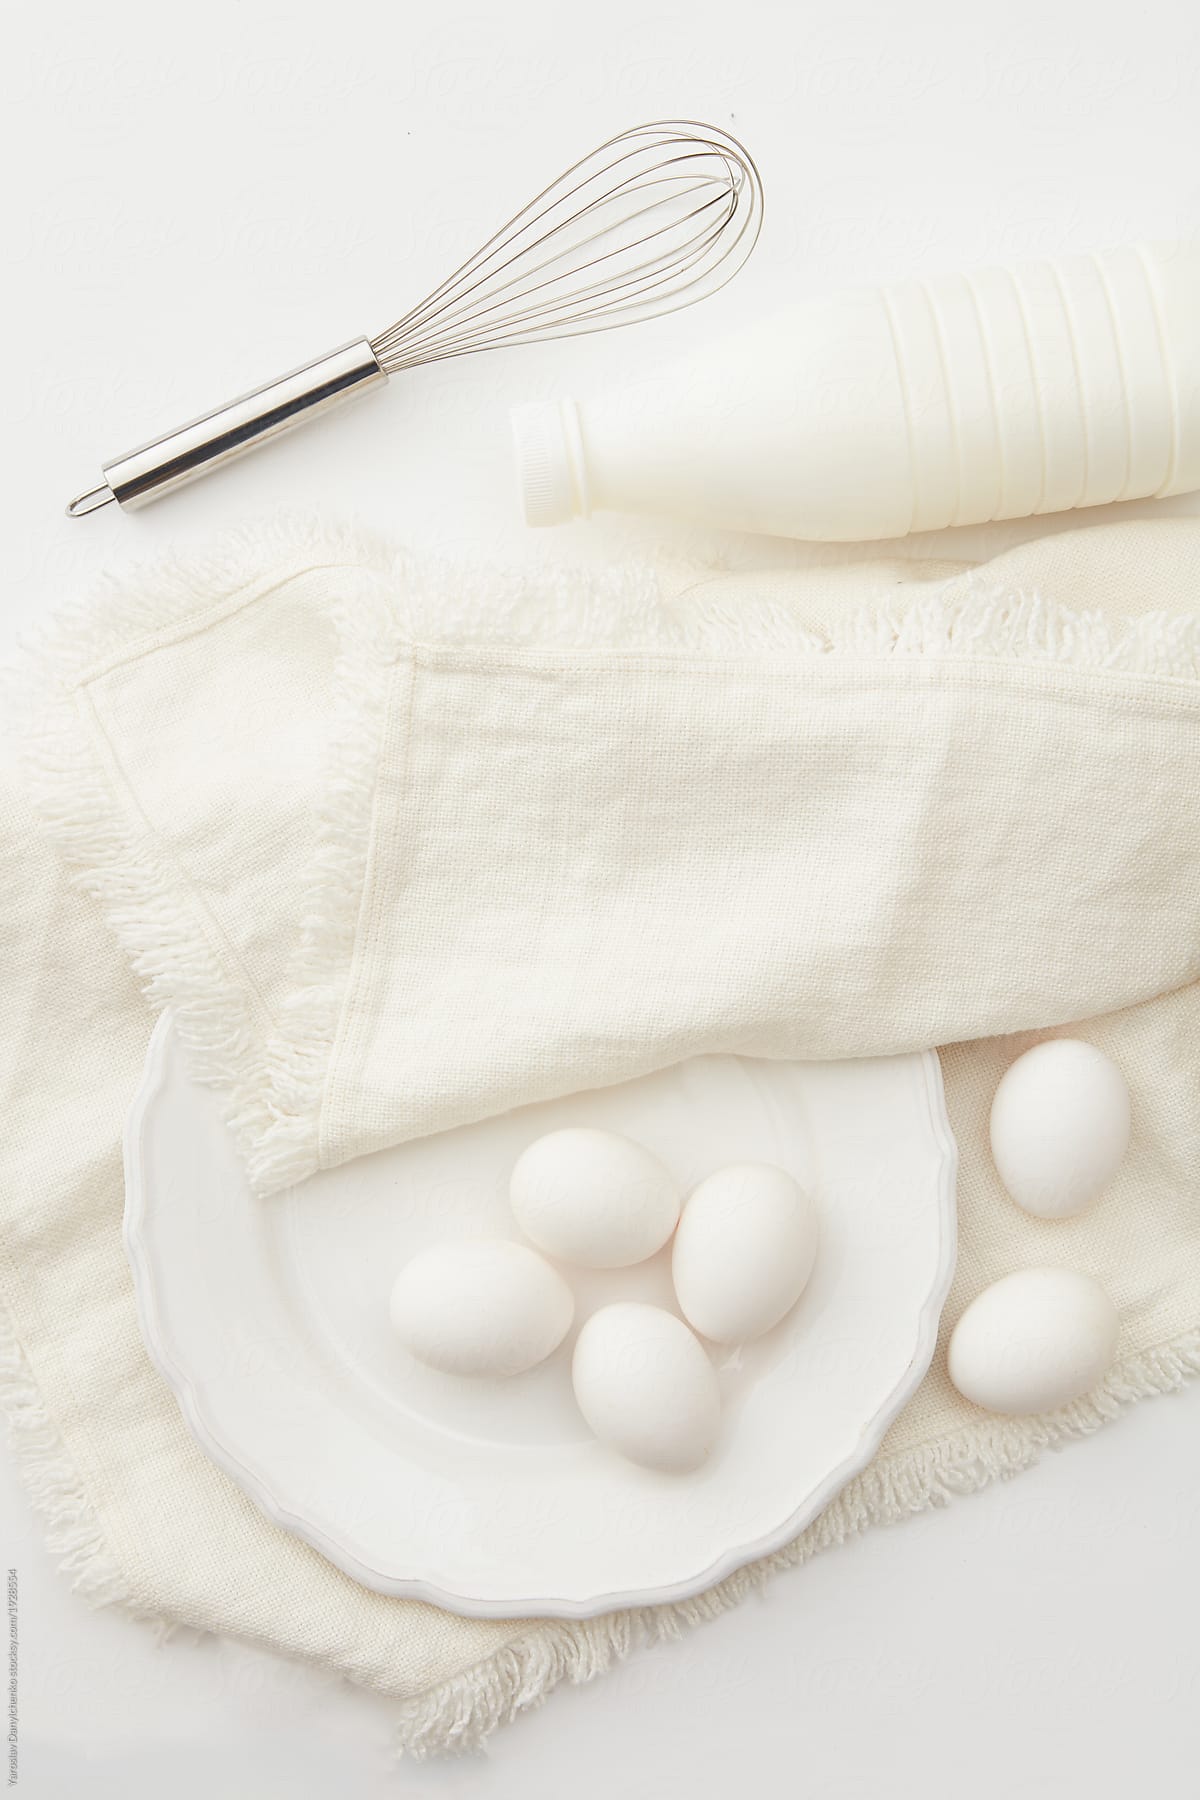 Milk, eggs Ingredients for baking